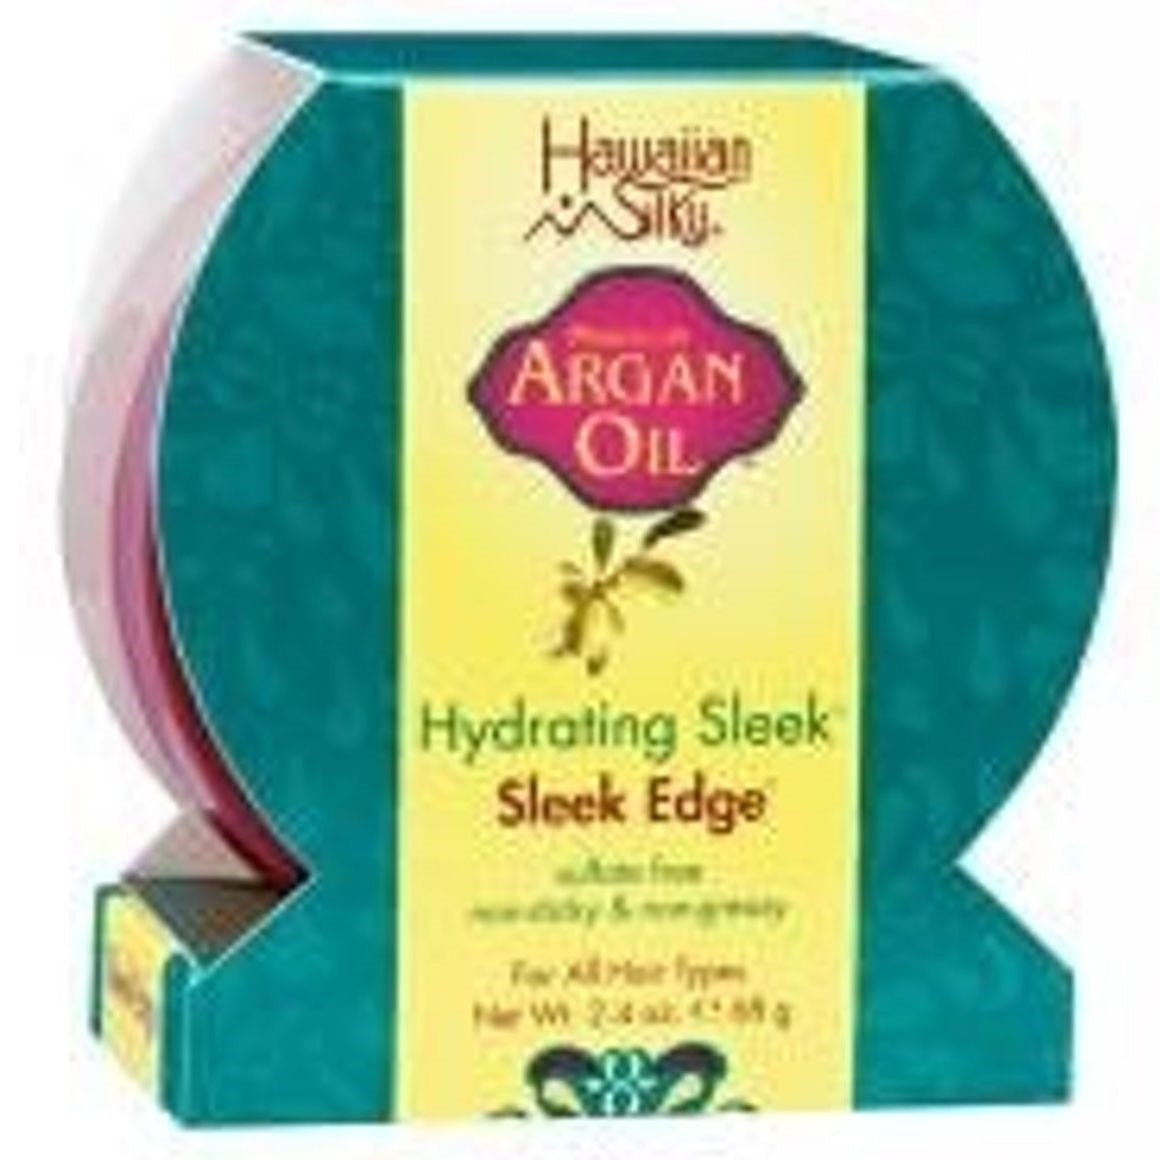 Hawaiian Silky Argan Oil Hydrating Sleak Edge 68 Gr